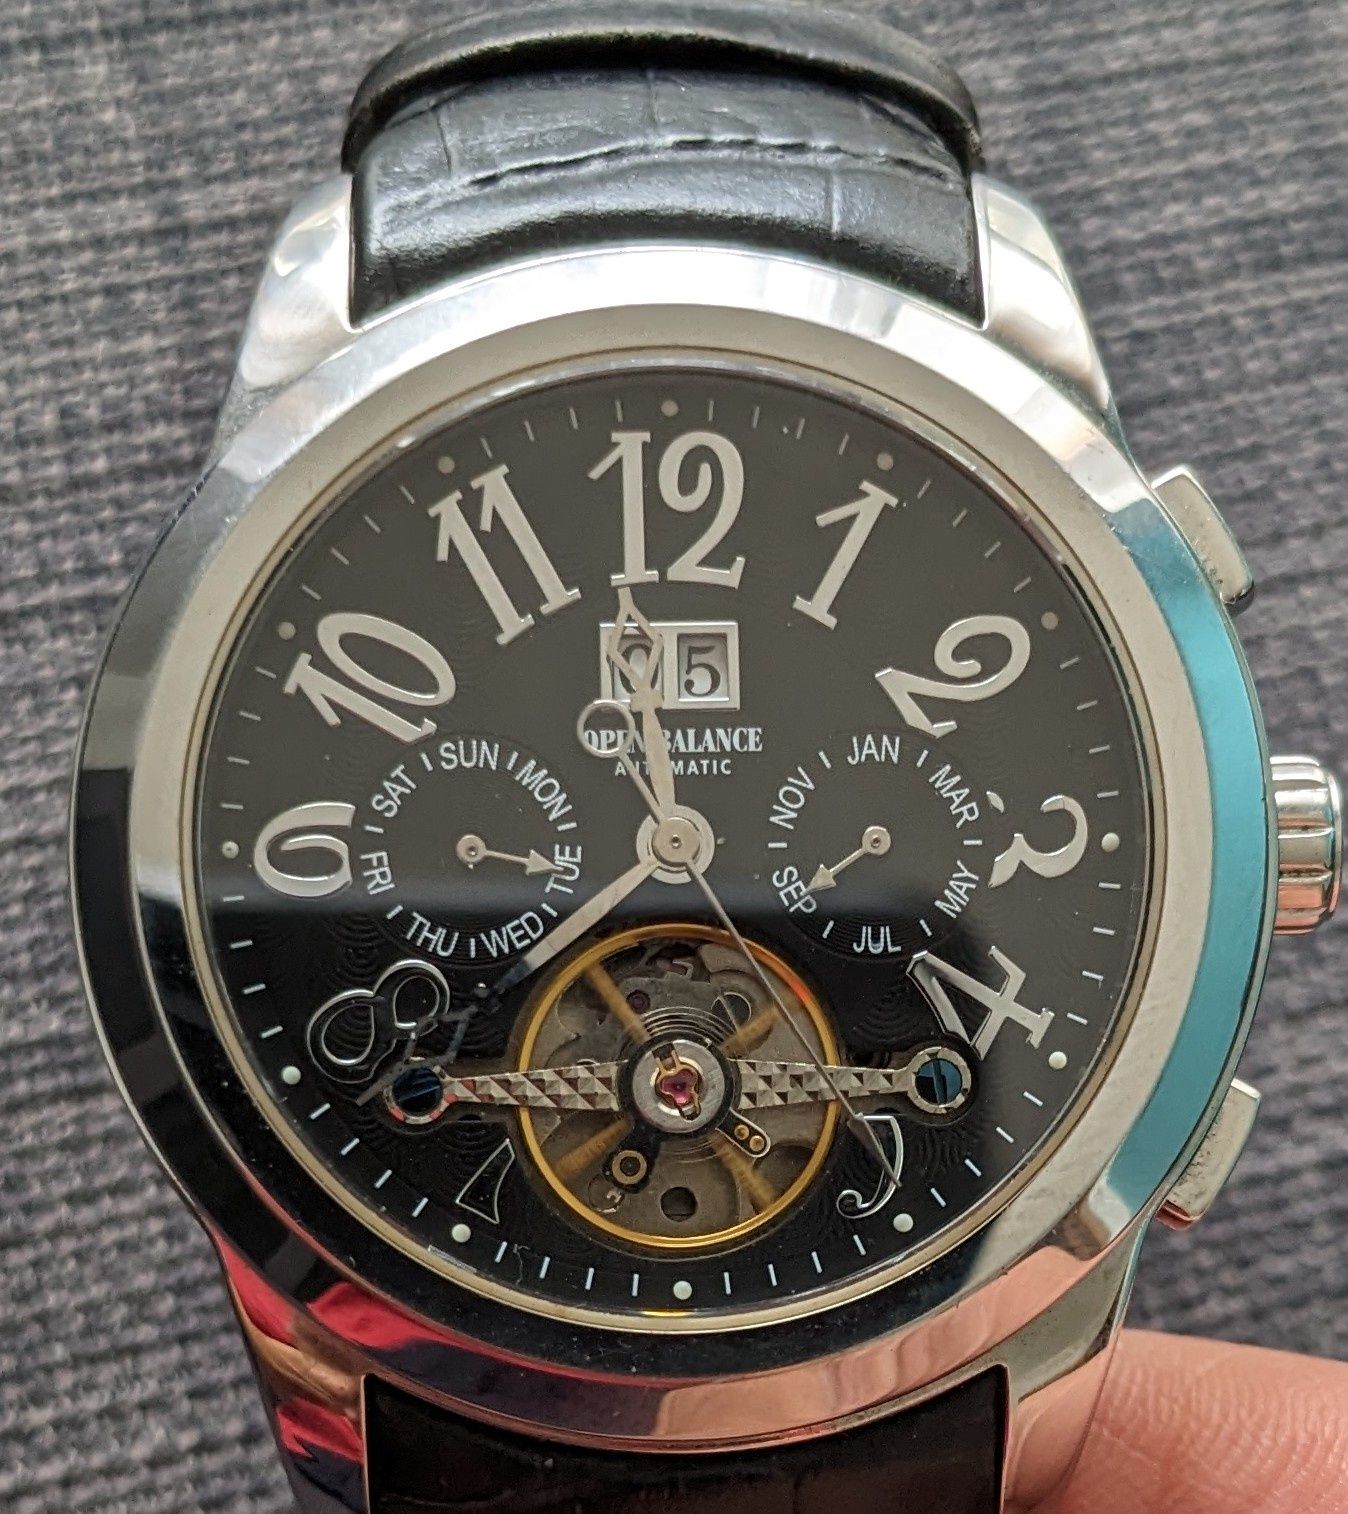 Relógio antigo Open Balance Sapphire